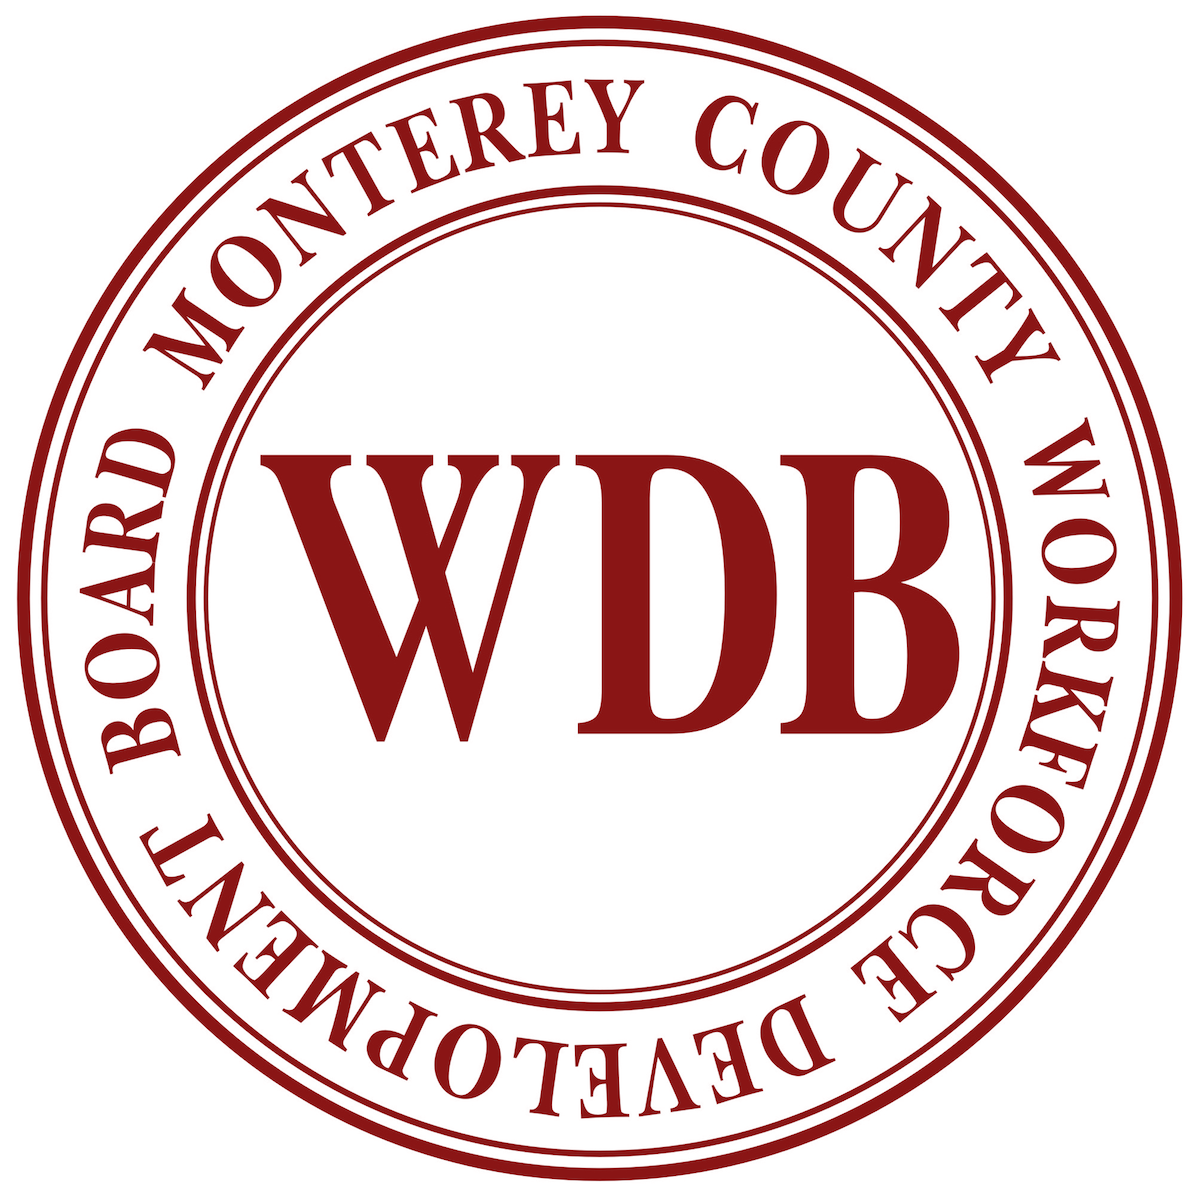 Monterey County workforce